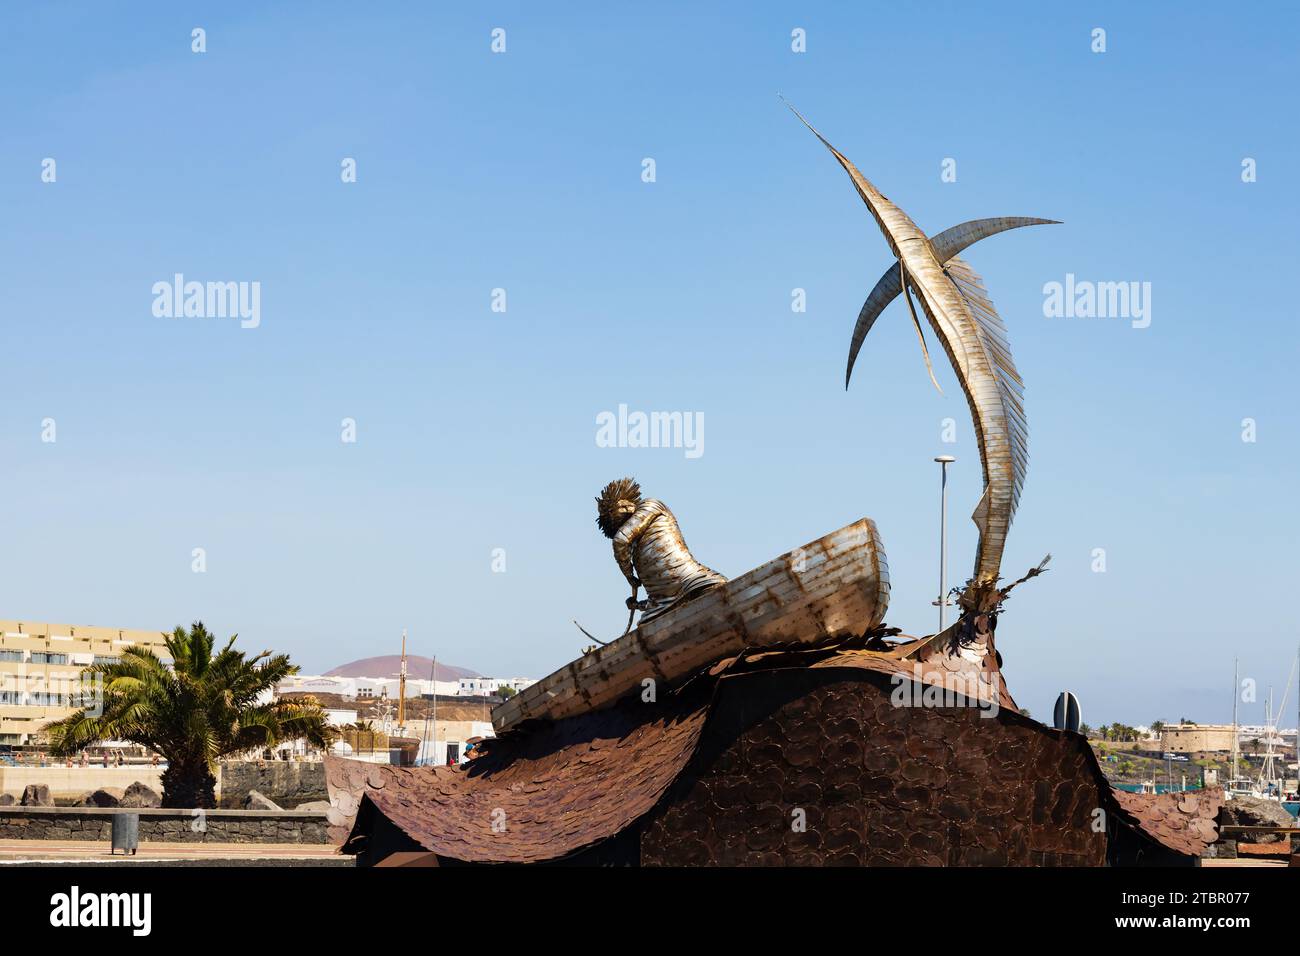 Statua di pesce di marlin d'acciaio, Av Olof Palme, Arrecife, Lanzarote, Las Palmas, Spagna Foto Stock